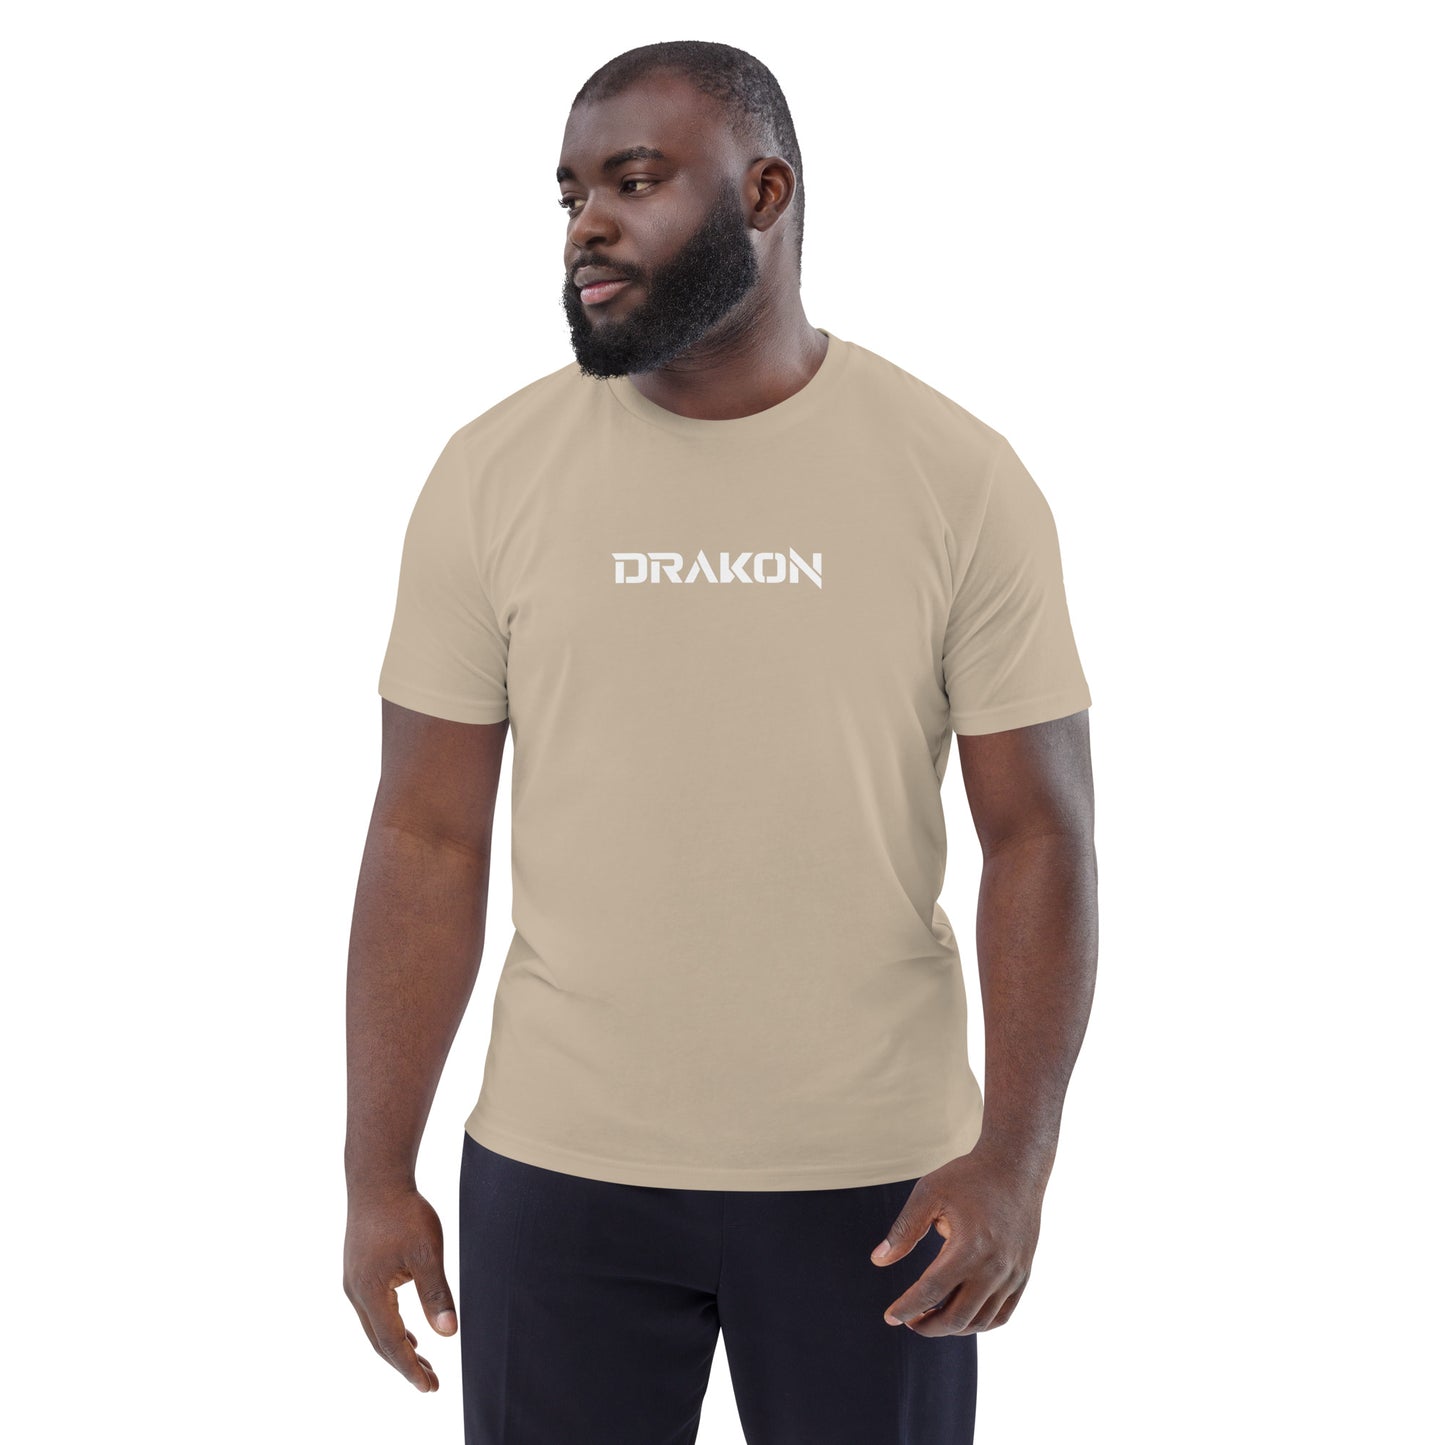 Aquarius - Drakon Short Sleeve T-Shirt